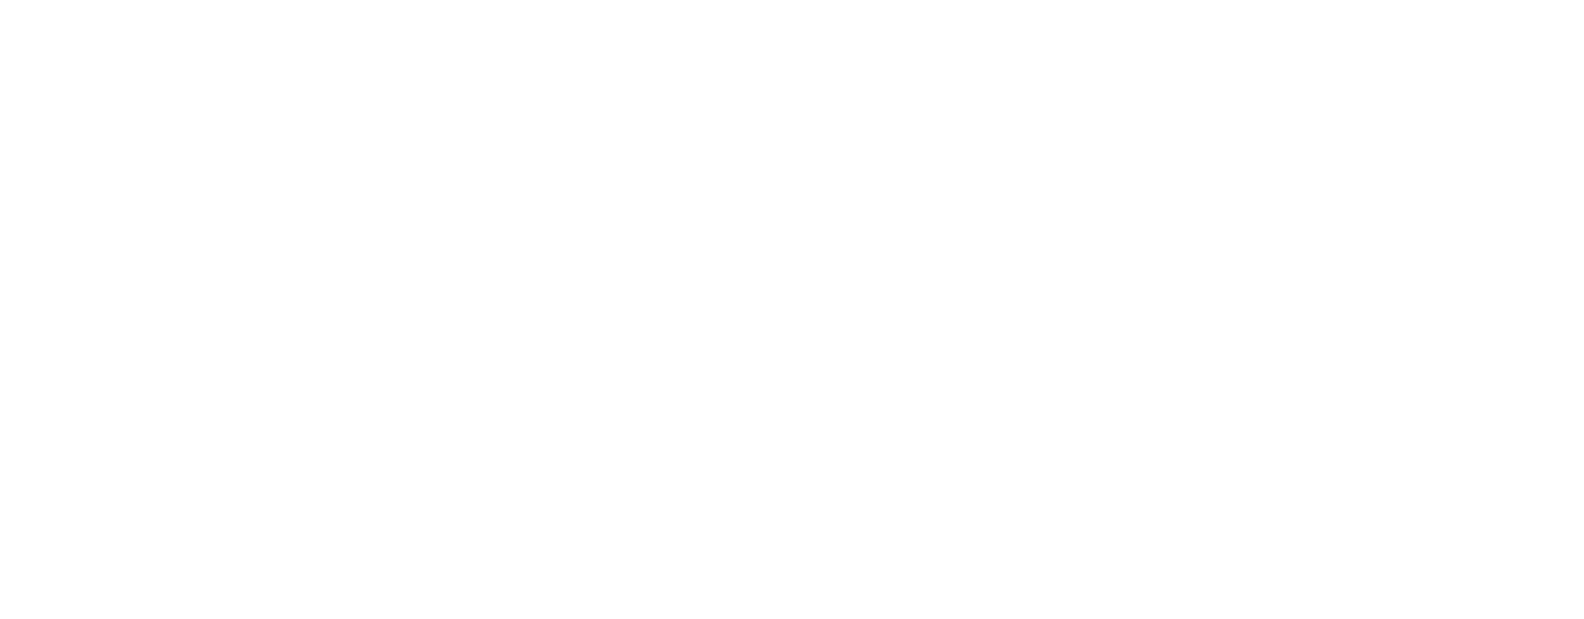 Casey's General Stores
 logo large for dark backgrounds (transparent PNG)